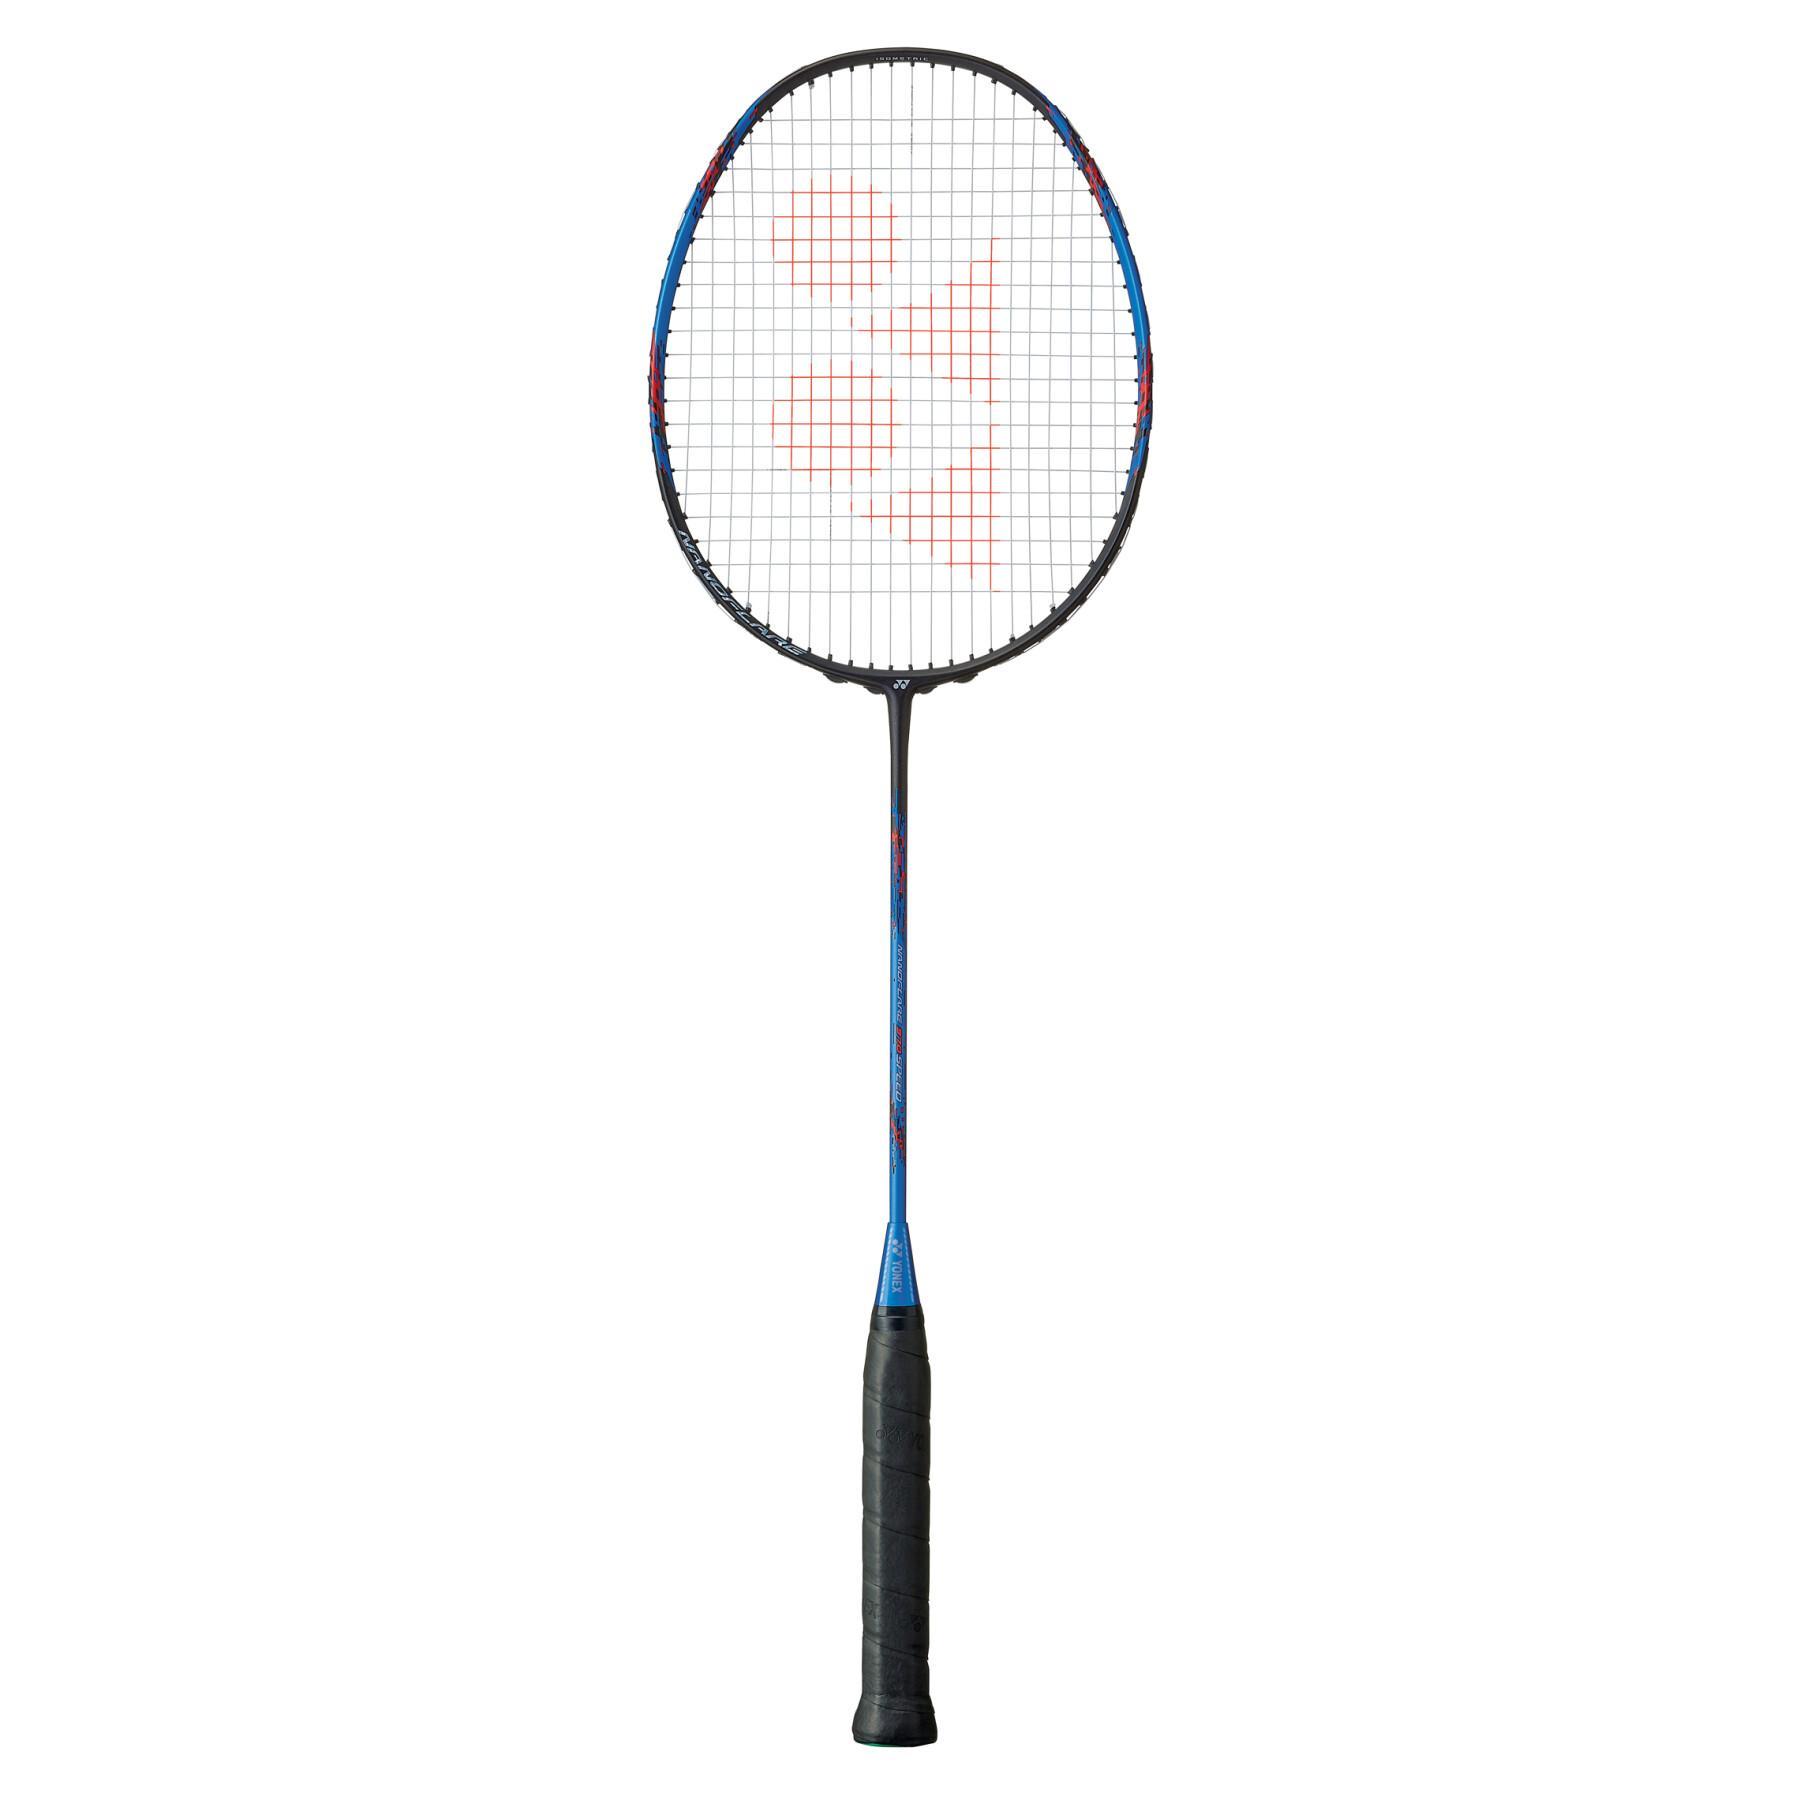 Racchetta da badminton Yonex Nanoflare 370 Speed 4u4